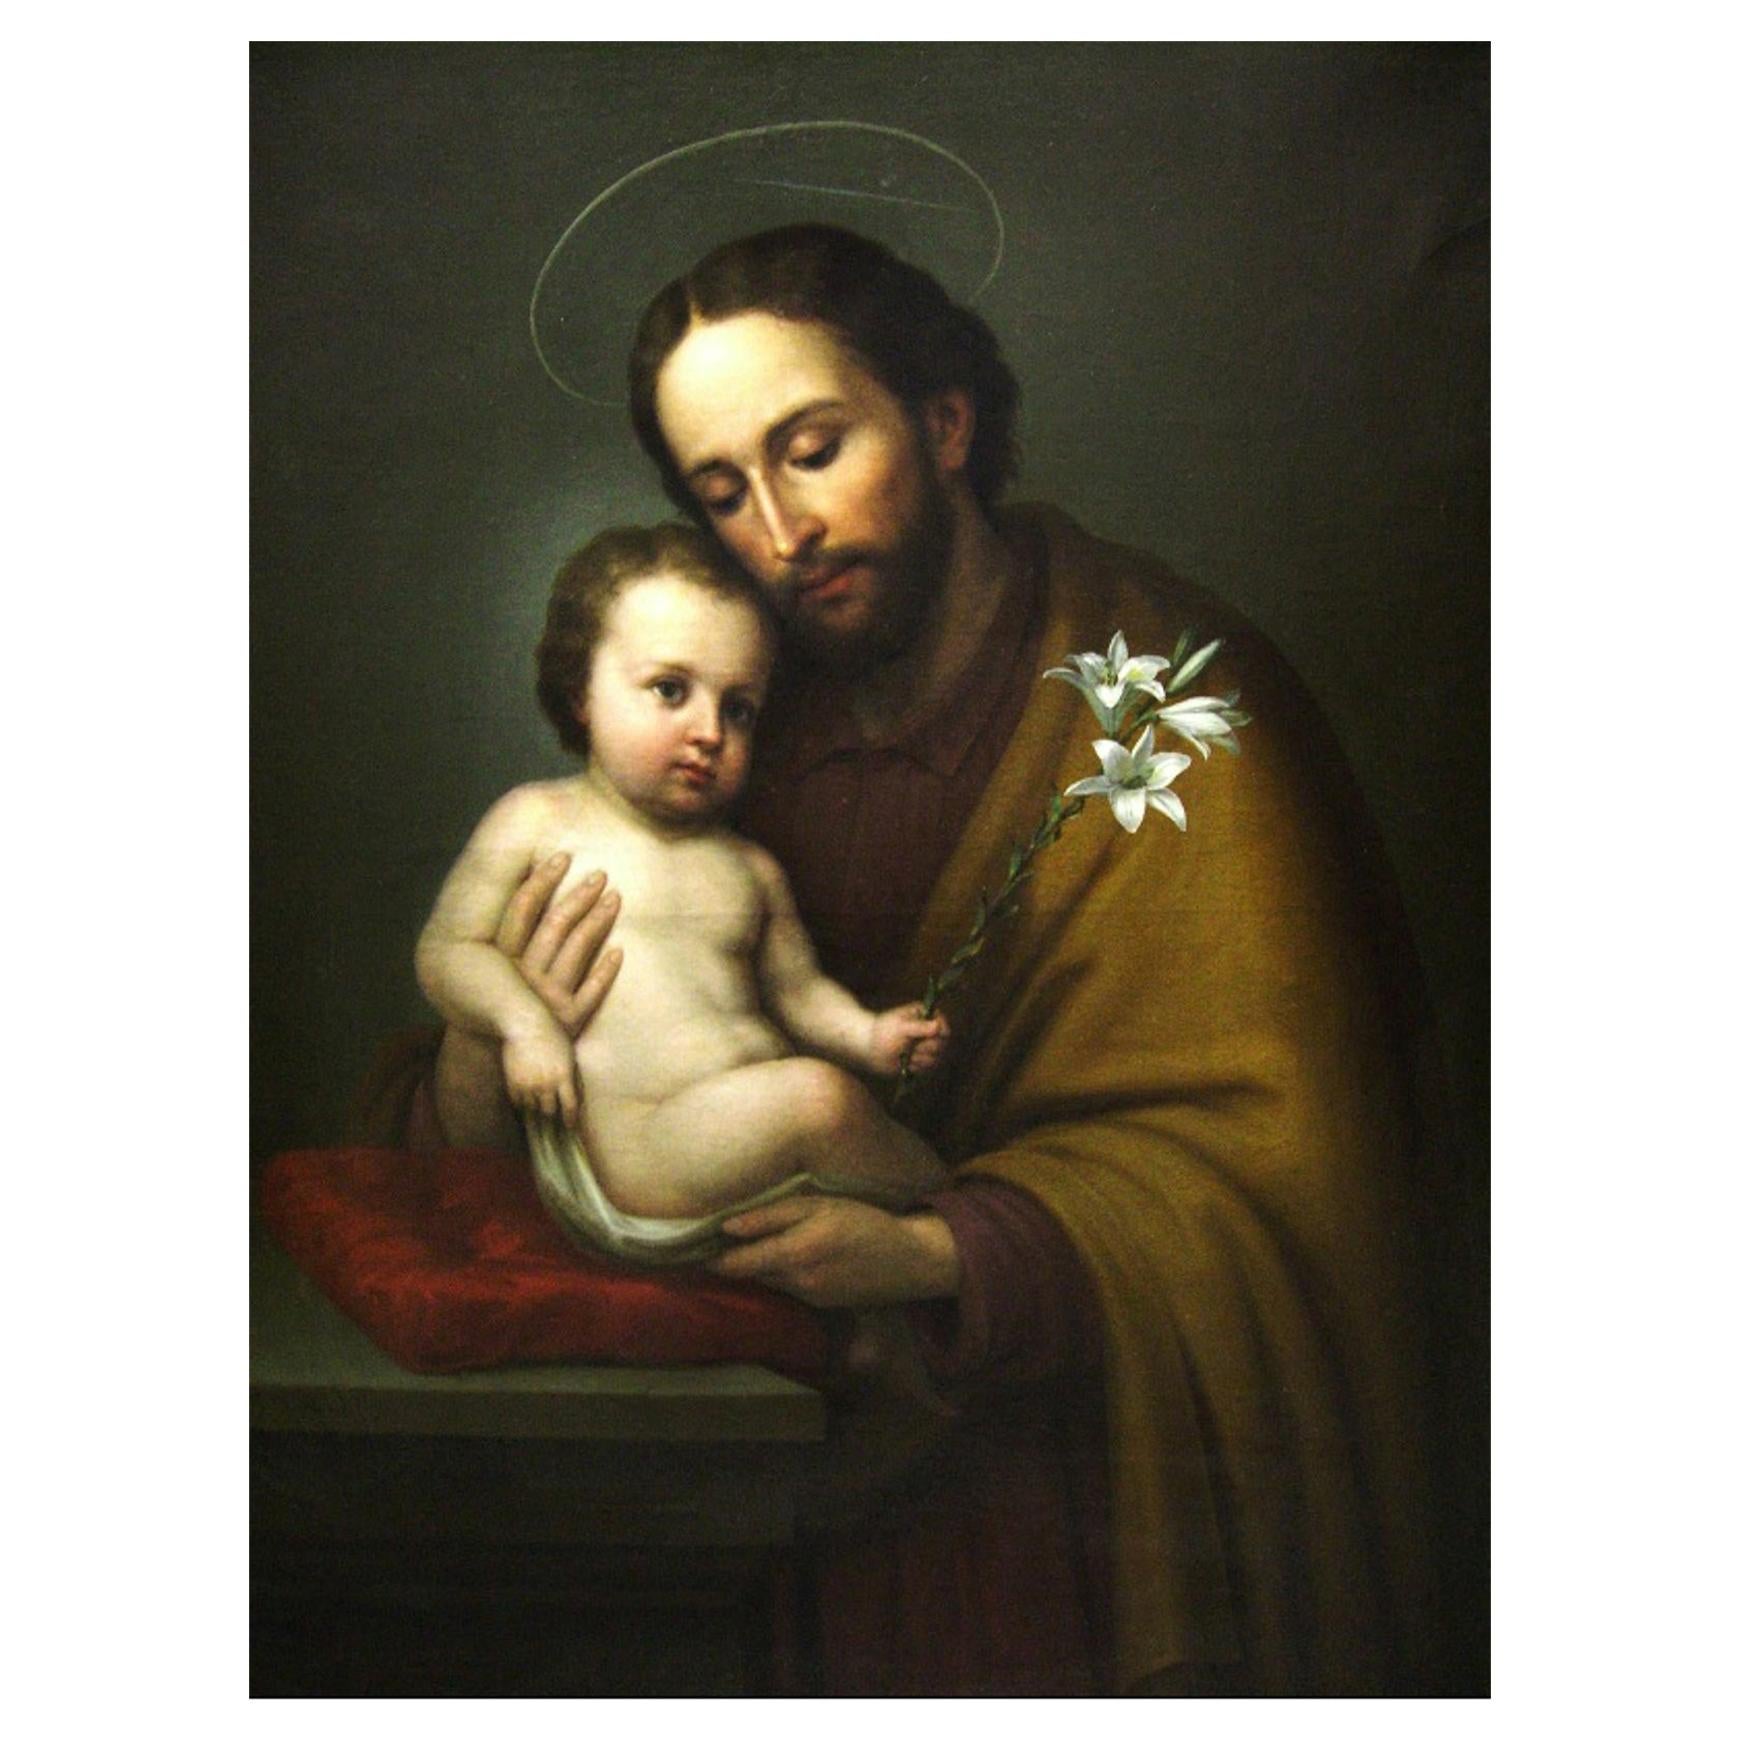 Italian Oil on Canvas Painting of Baby Jesus, 19th Century Signed Luis Cadena